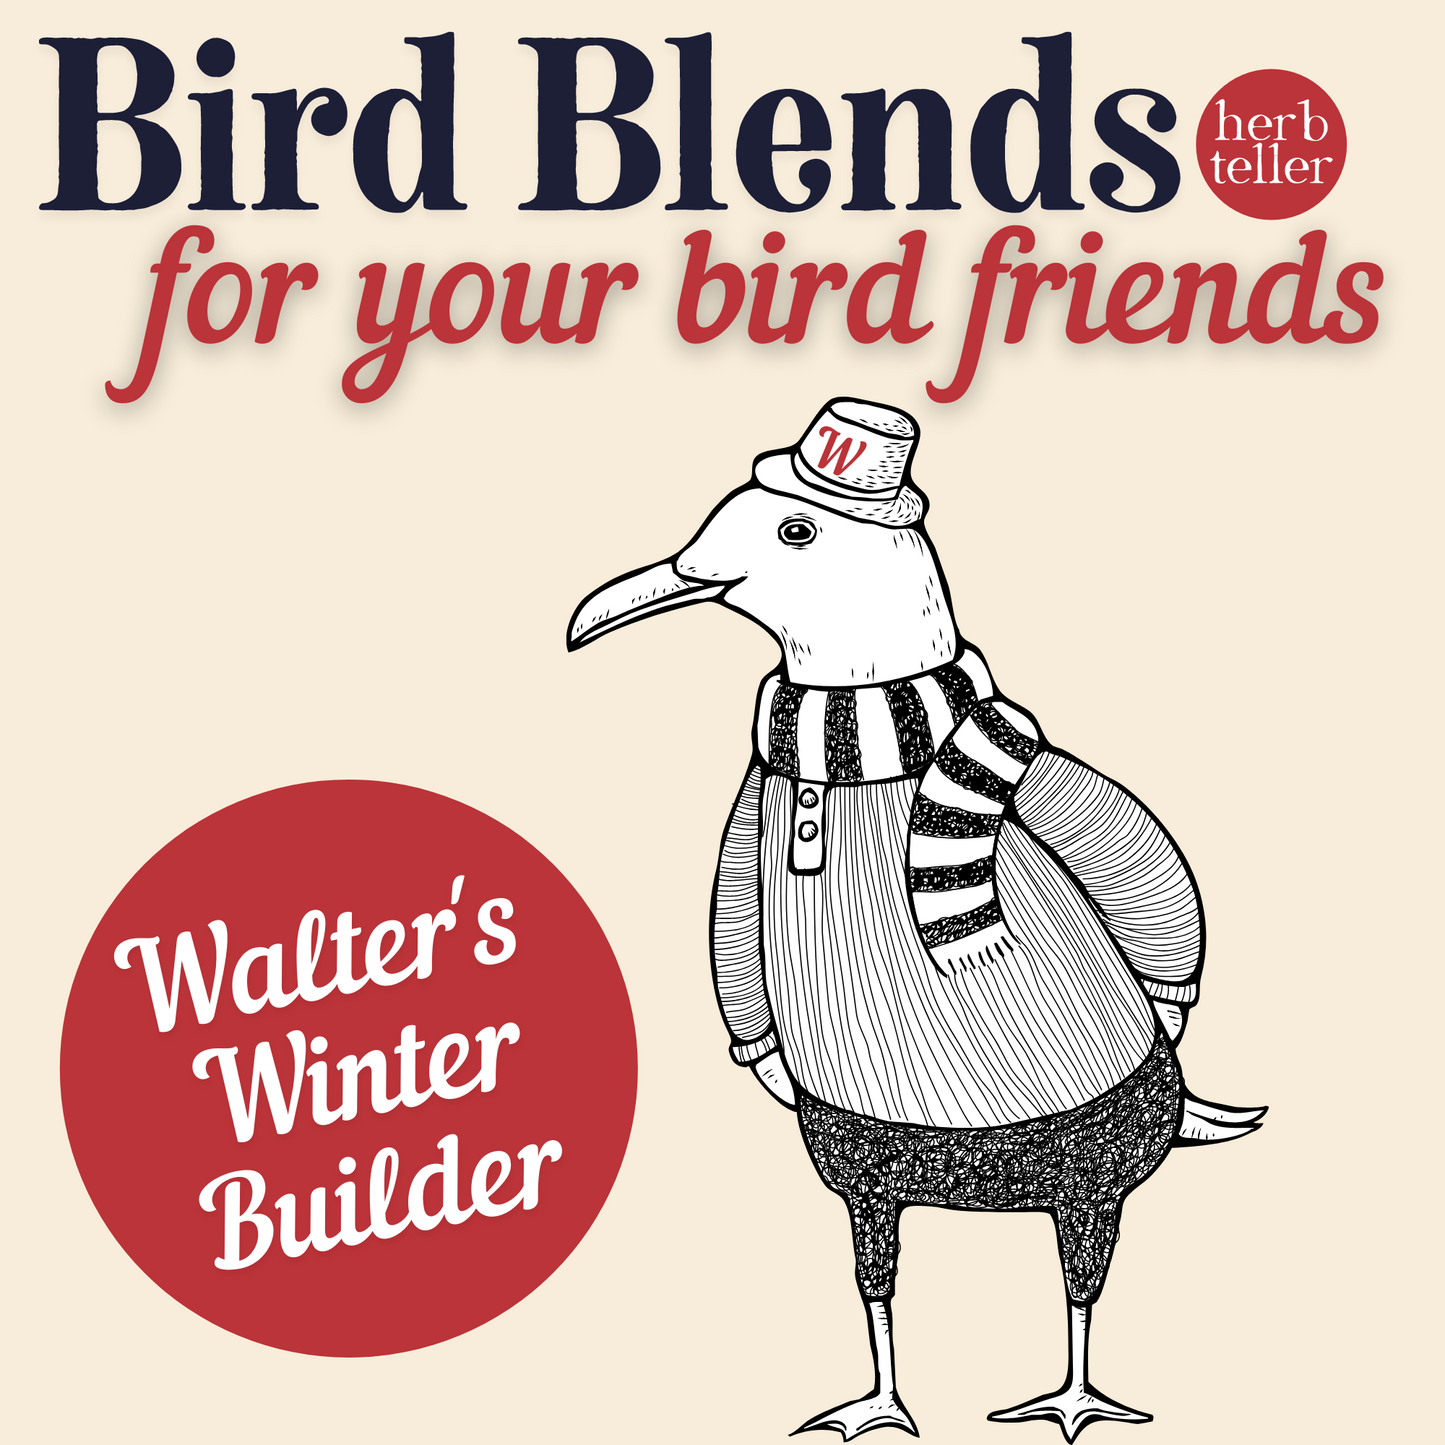 Walter's Winter Pocket Feeder| Bird Blends for your Bird Friends | Herbal Bird Seed Mix - Original City Apothecary